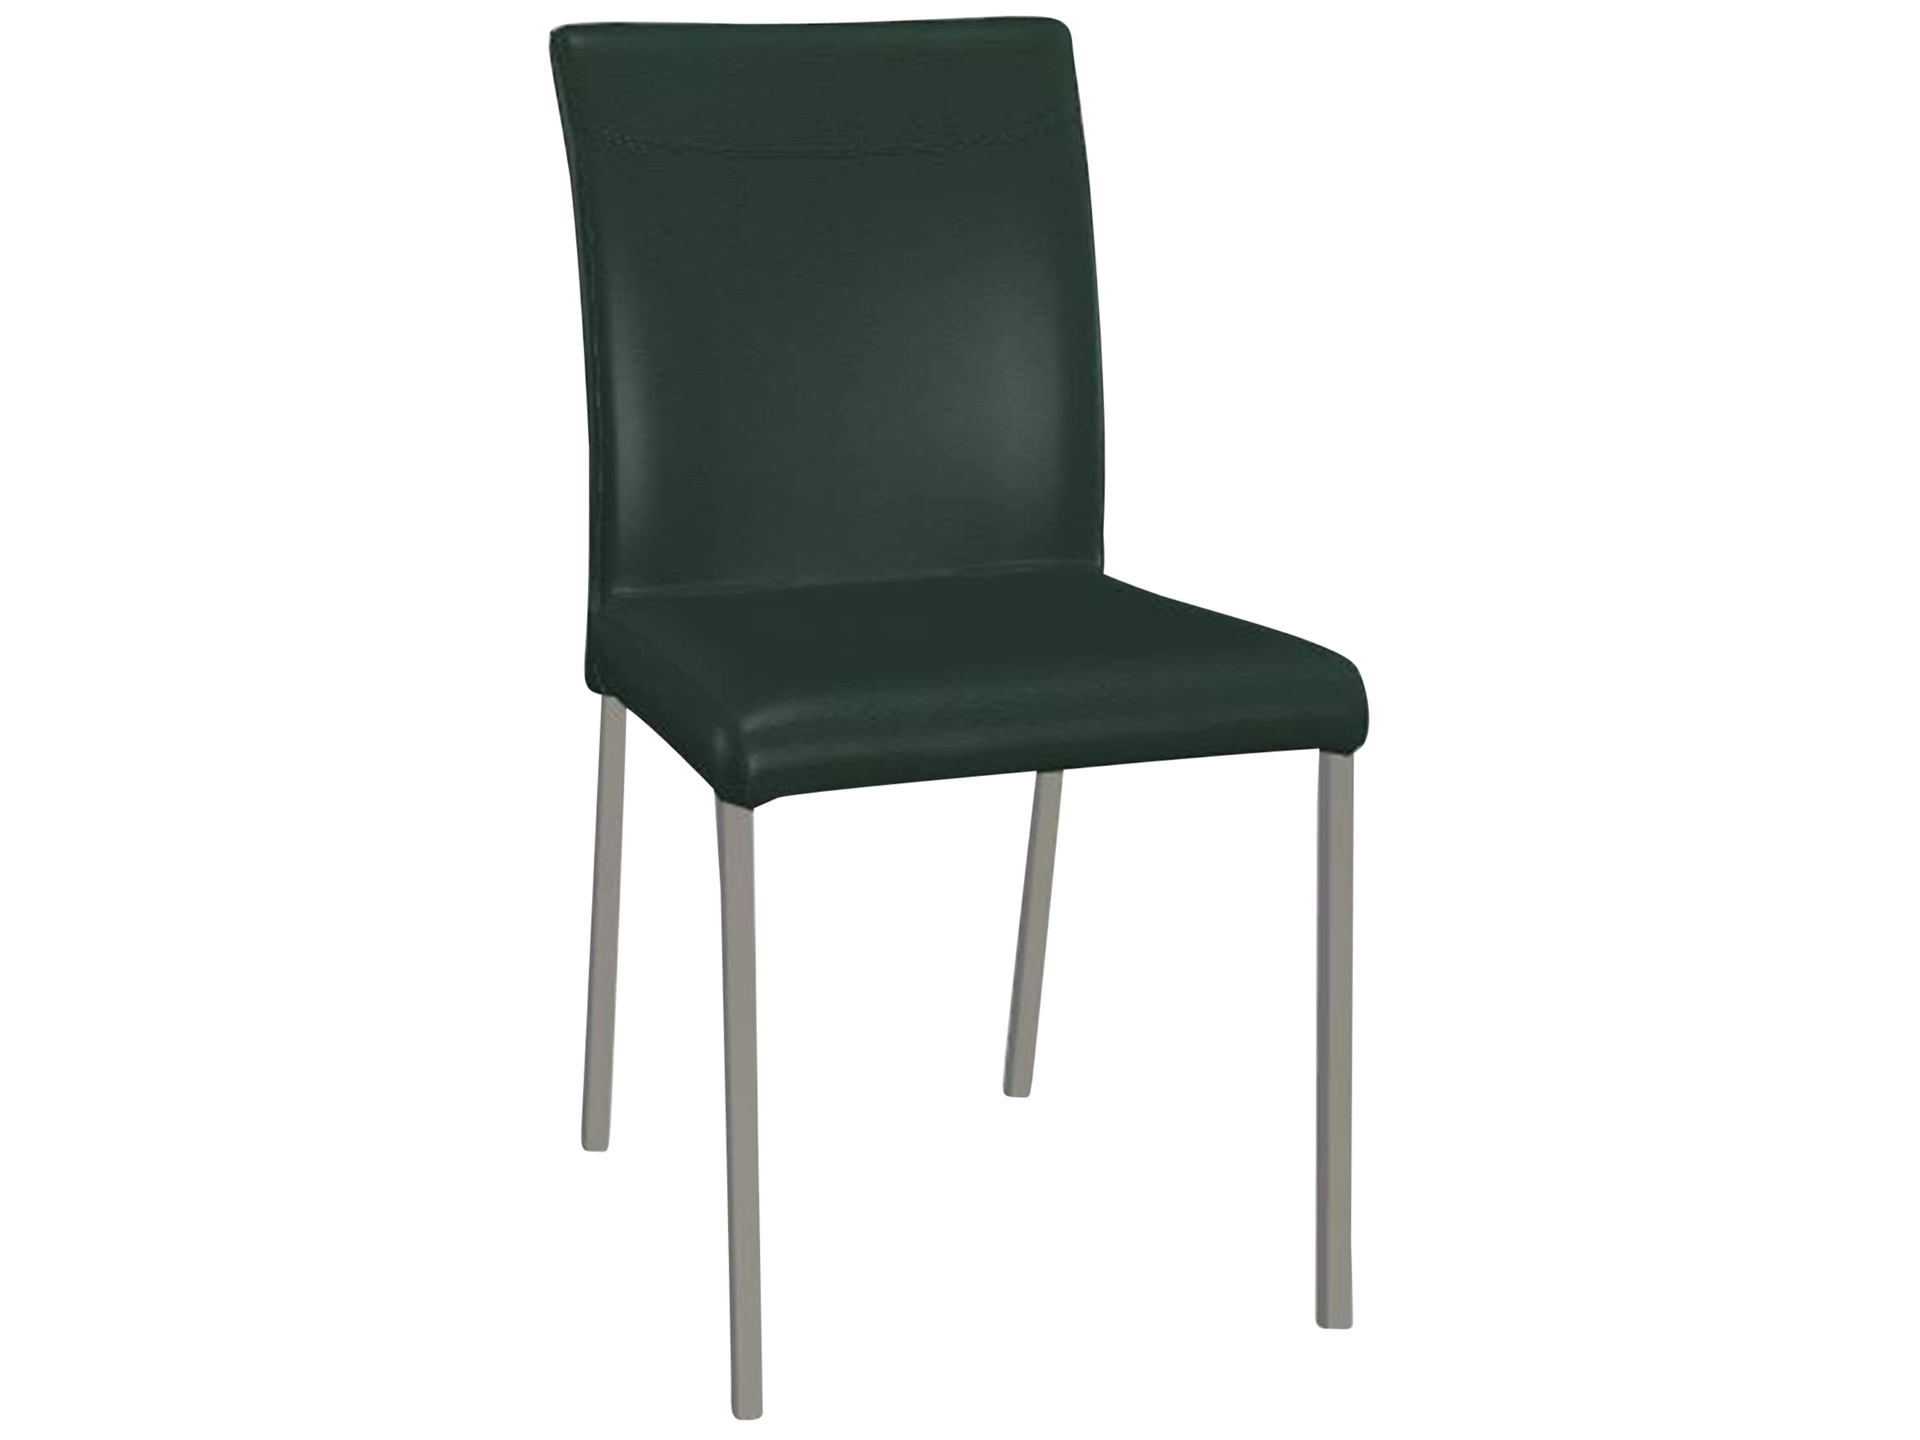 Stuhl Leicht Premium Trendstühle / Farbe: Forest / Material: Leder